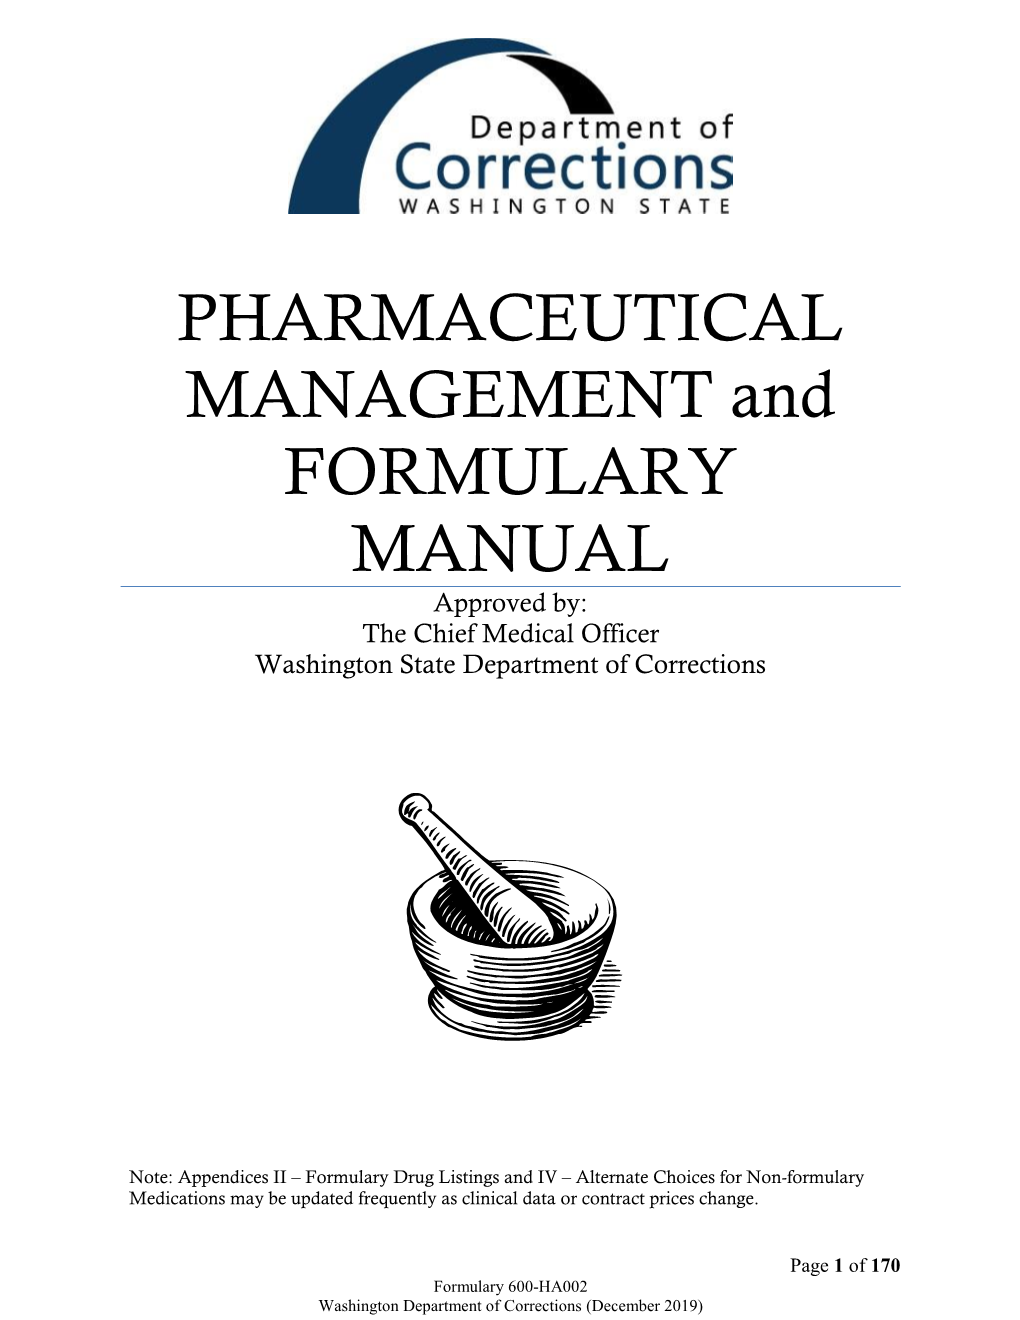 Pharmaceutical Management and Formulary Manual (Pdf)